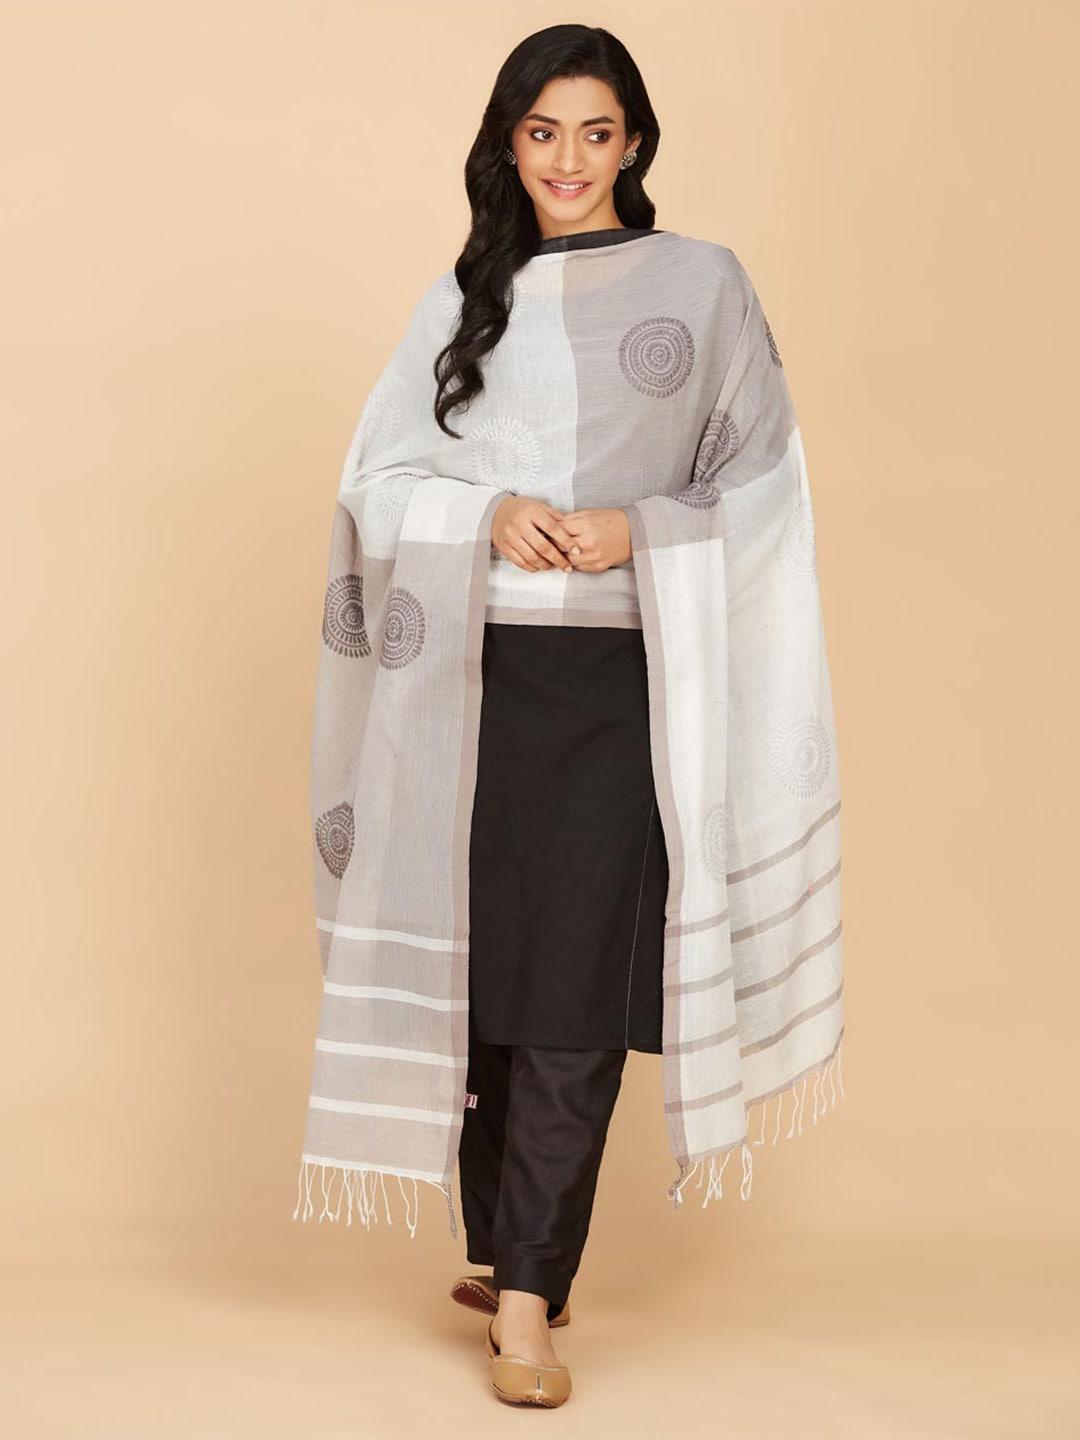 fabindia-white-&-grey-ethnic-motifs-embroidered-dupatta-with-chikankari